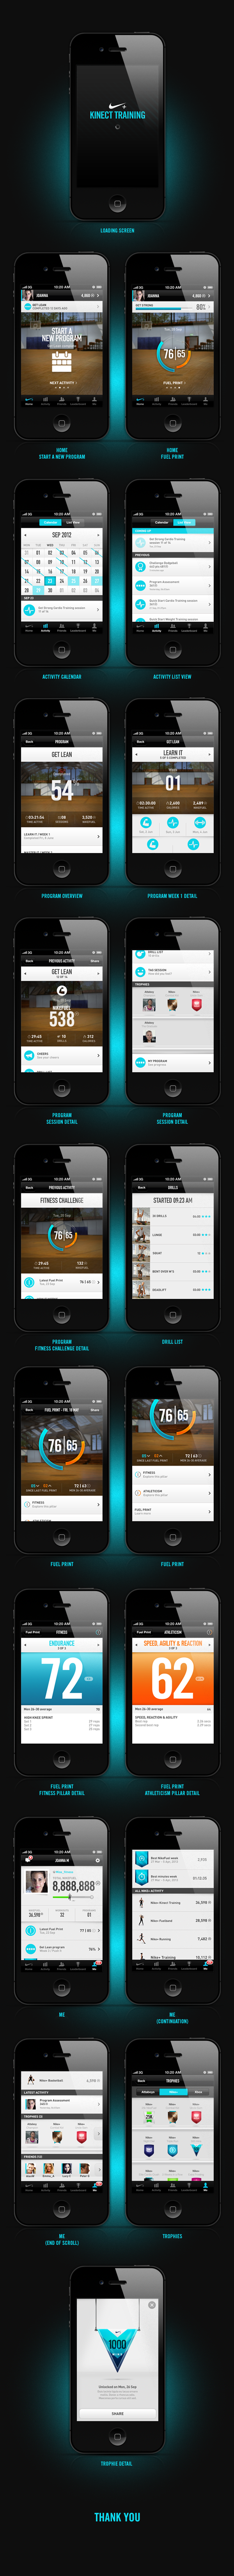 Nike UI  iphone user interface kinect xbox